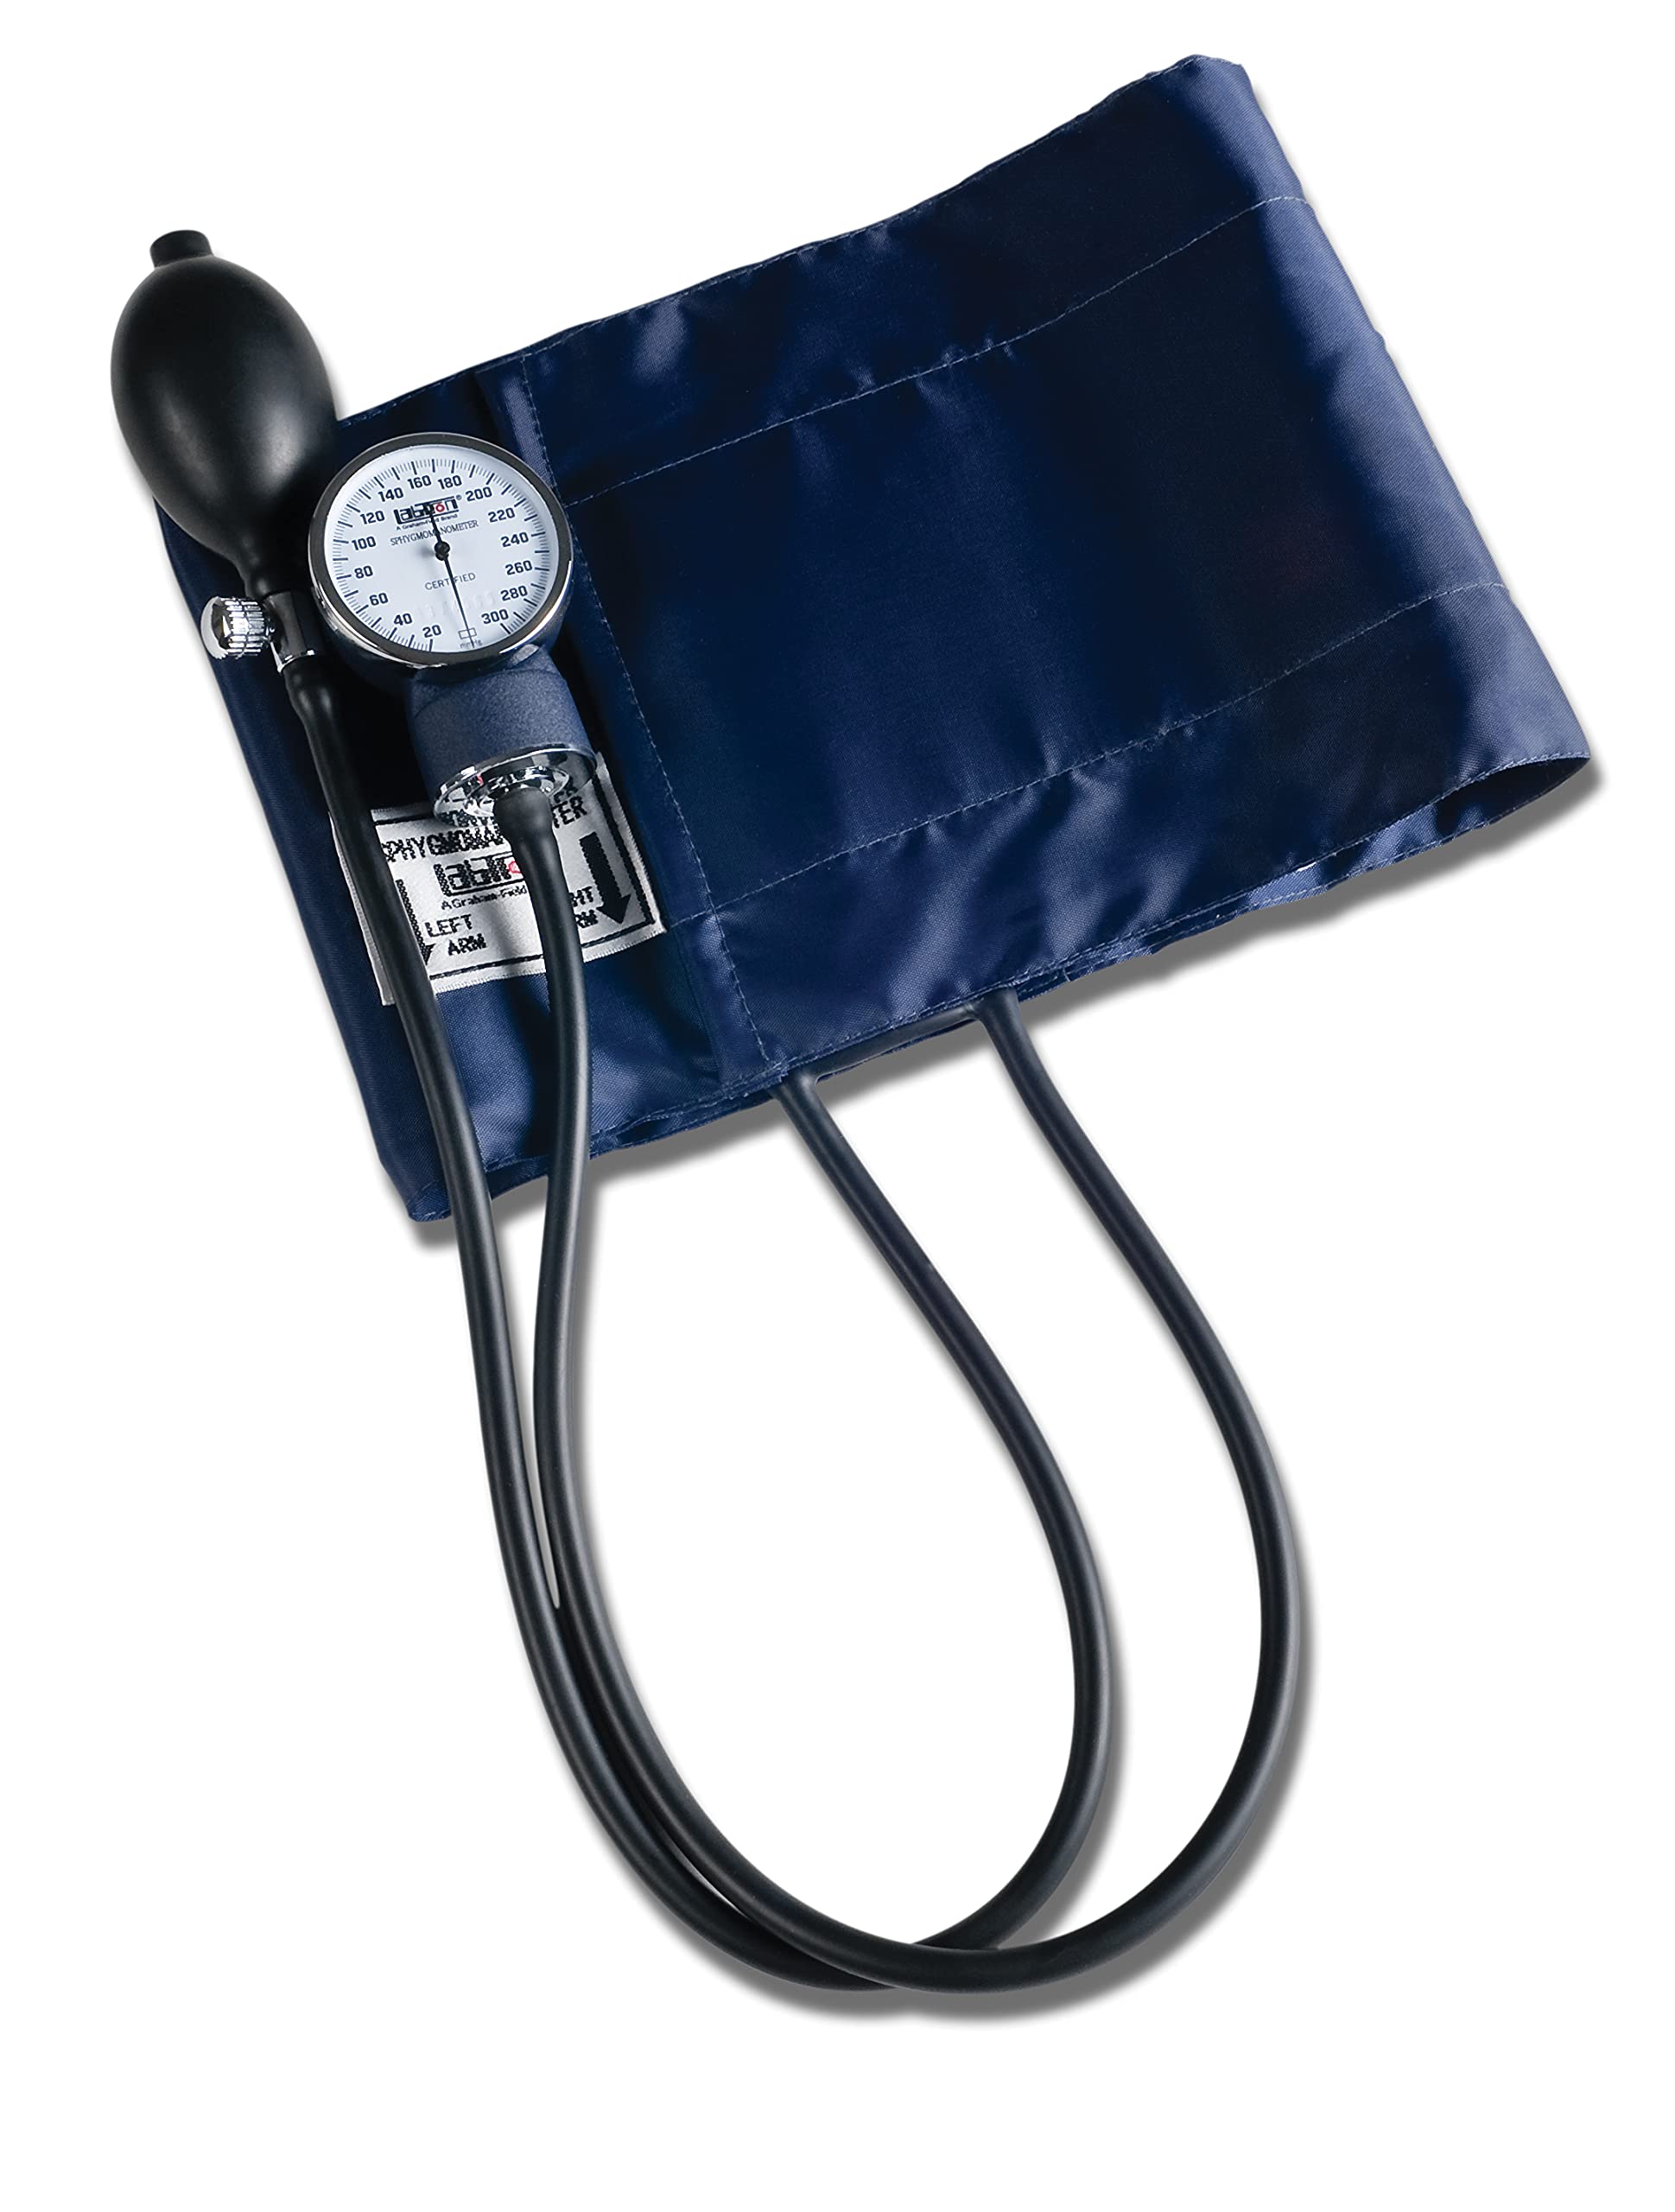 Labtron Manual Blood Pressure Monitor Adult XL Cuff Labstar Deluxe